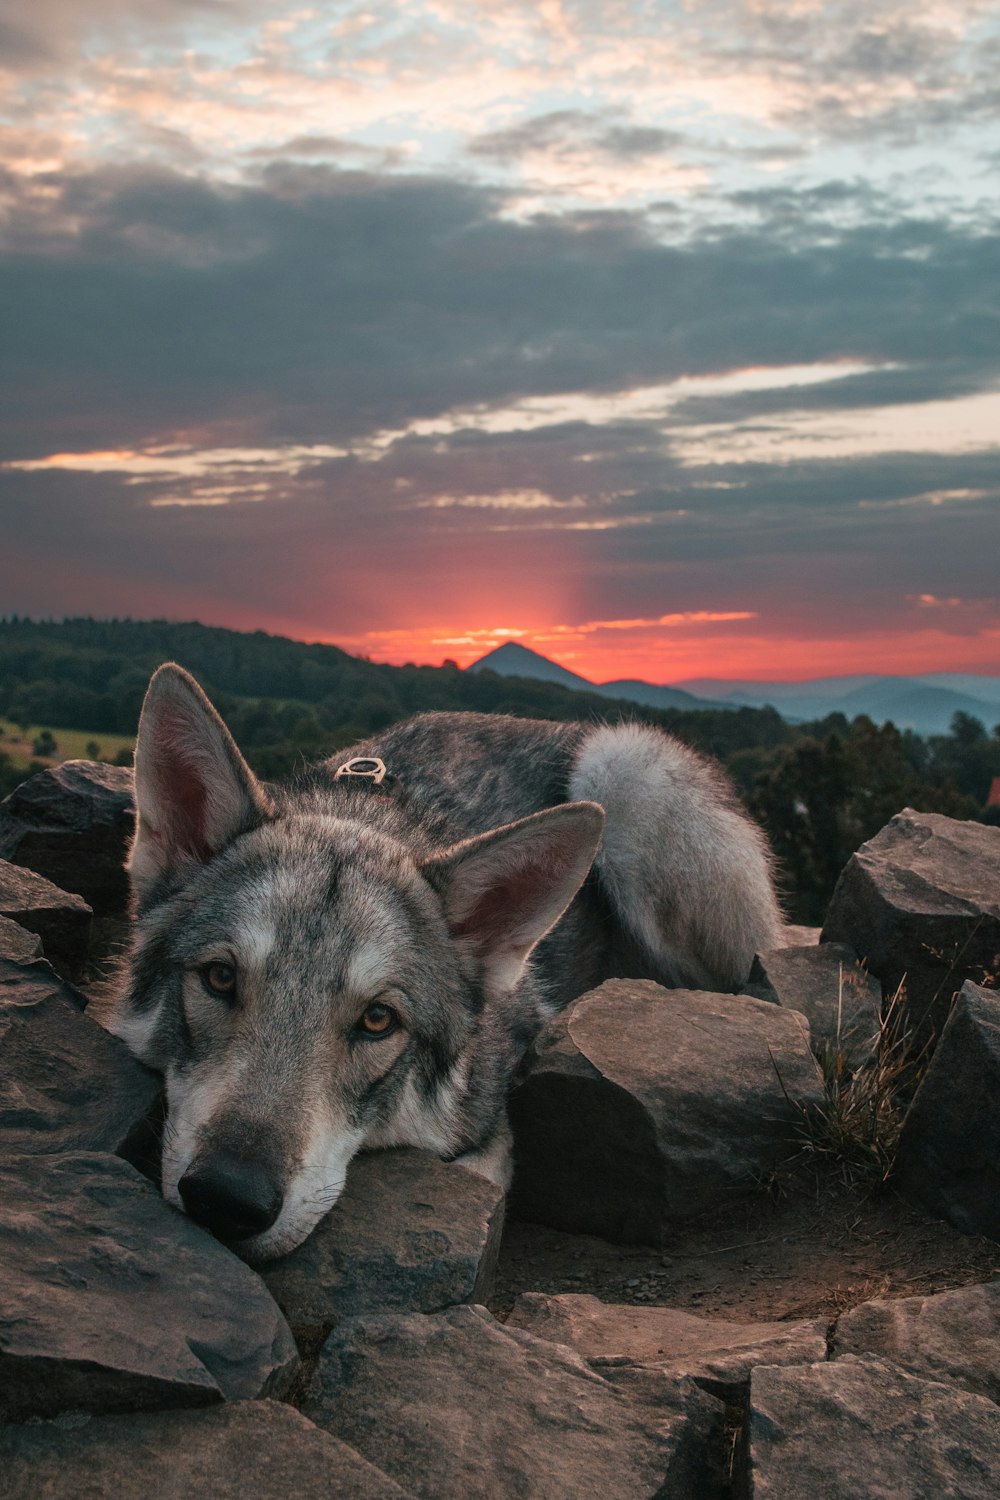 a dog standing on rocks